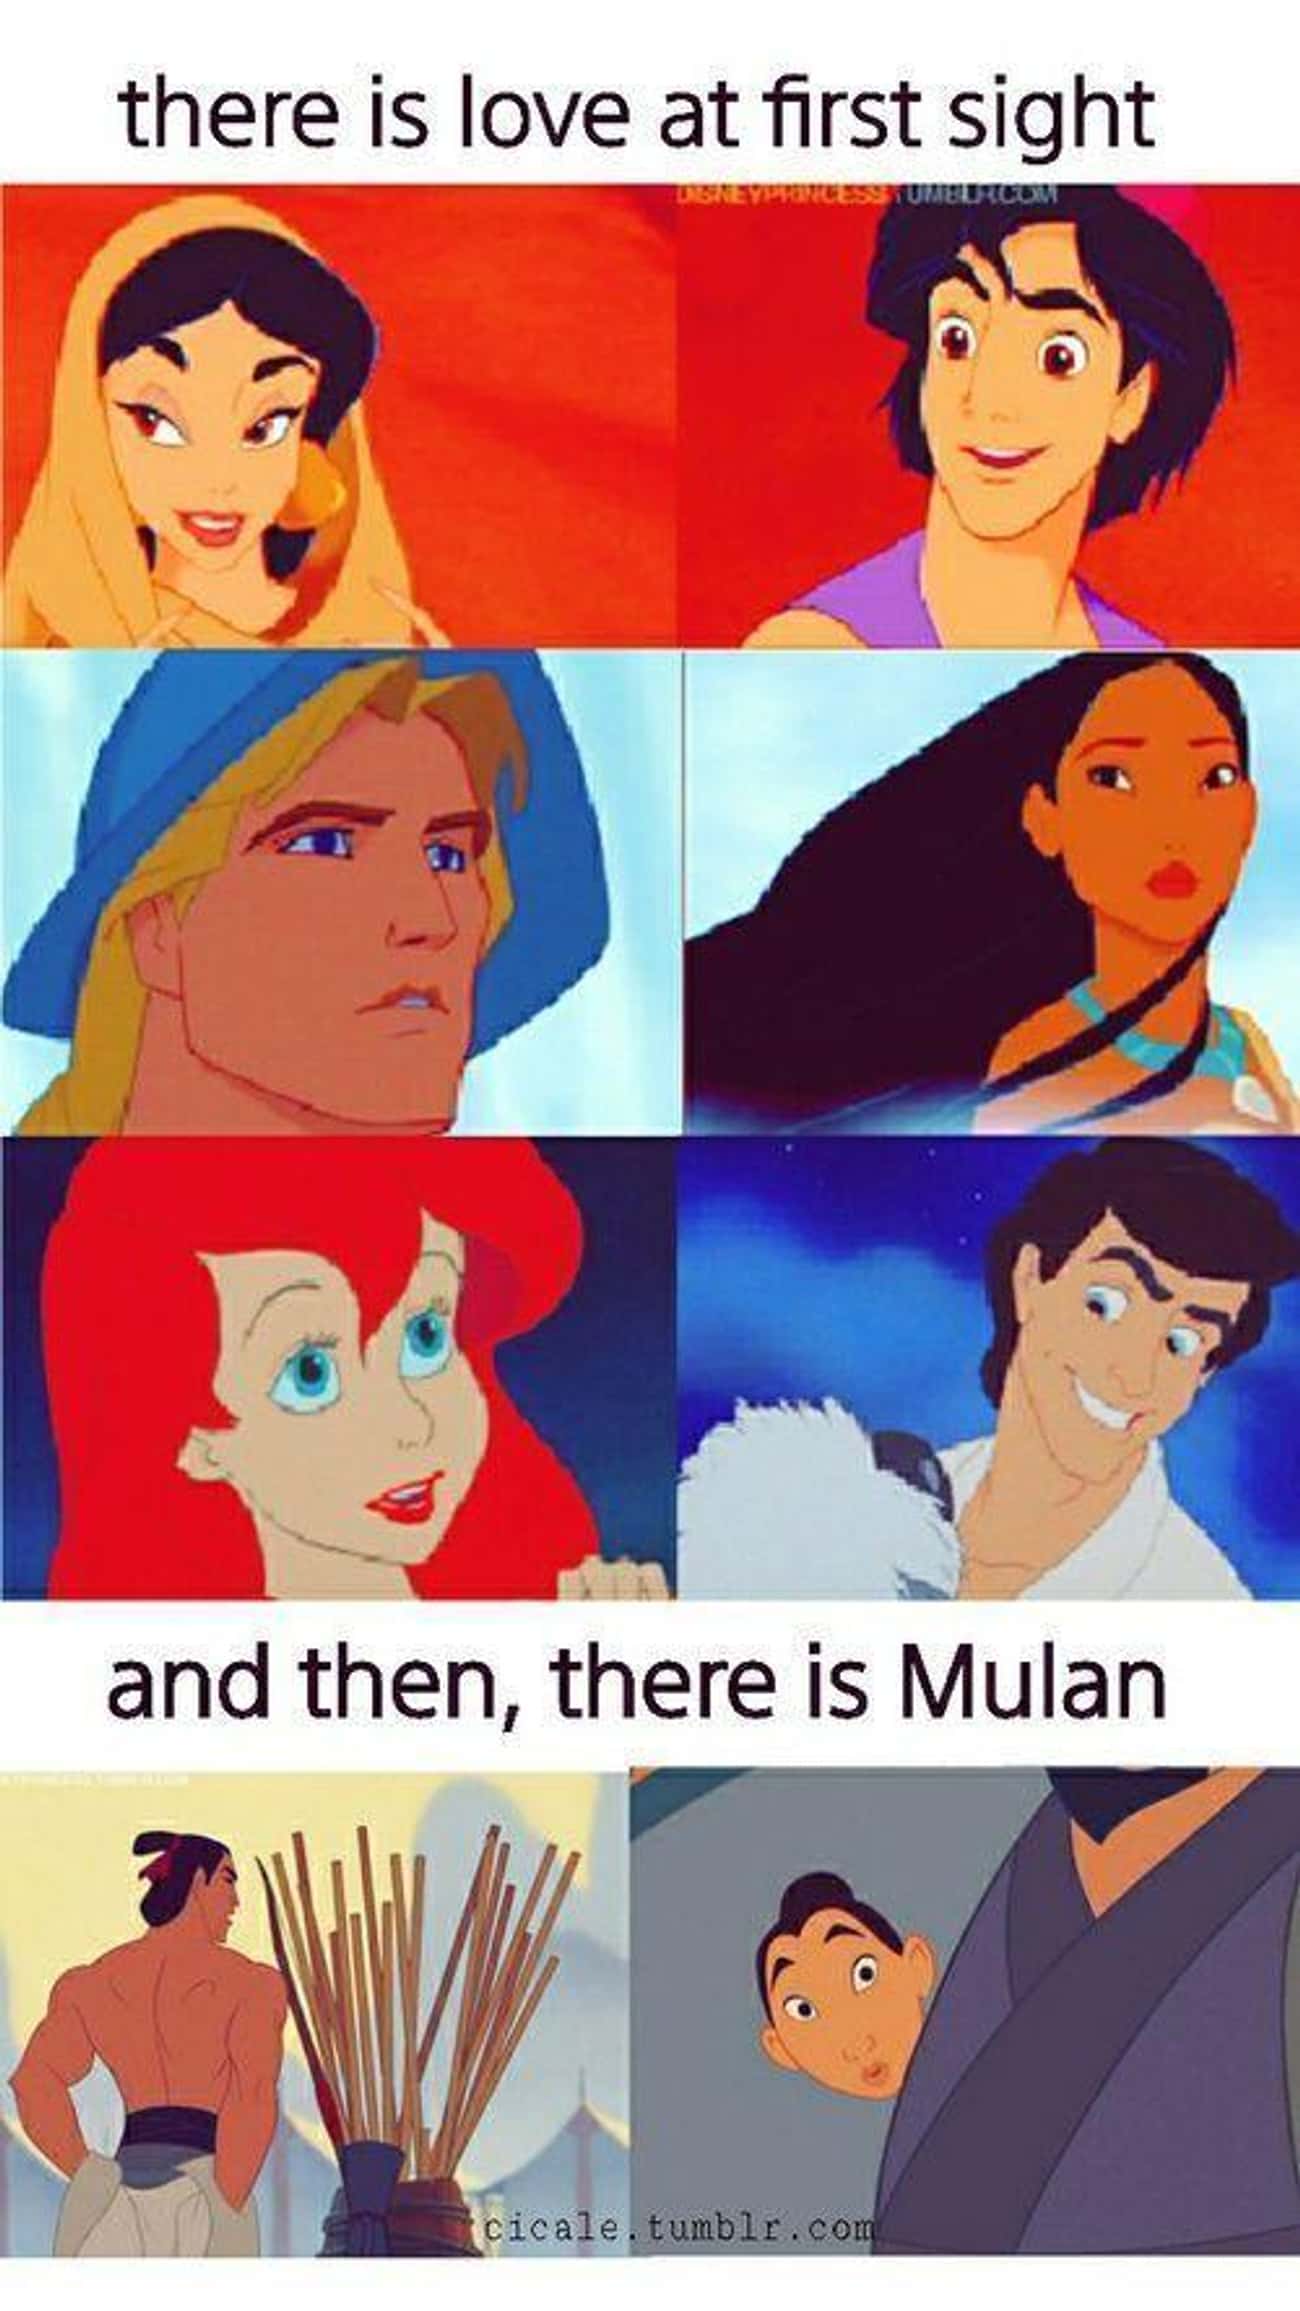 Mulan Has Different Priorities